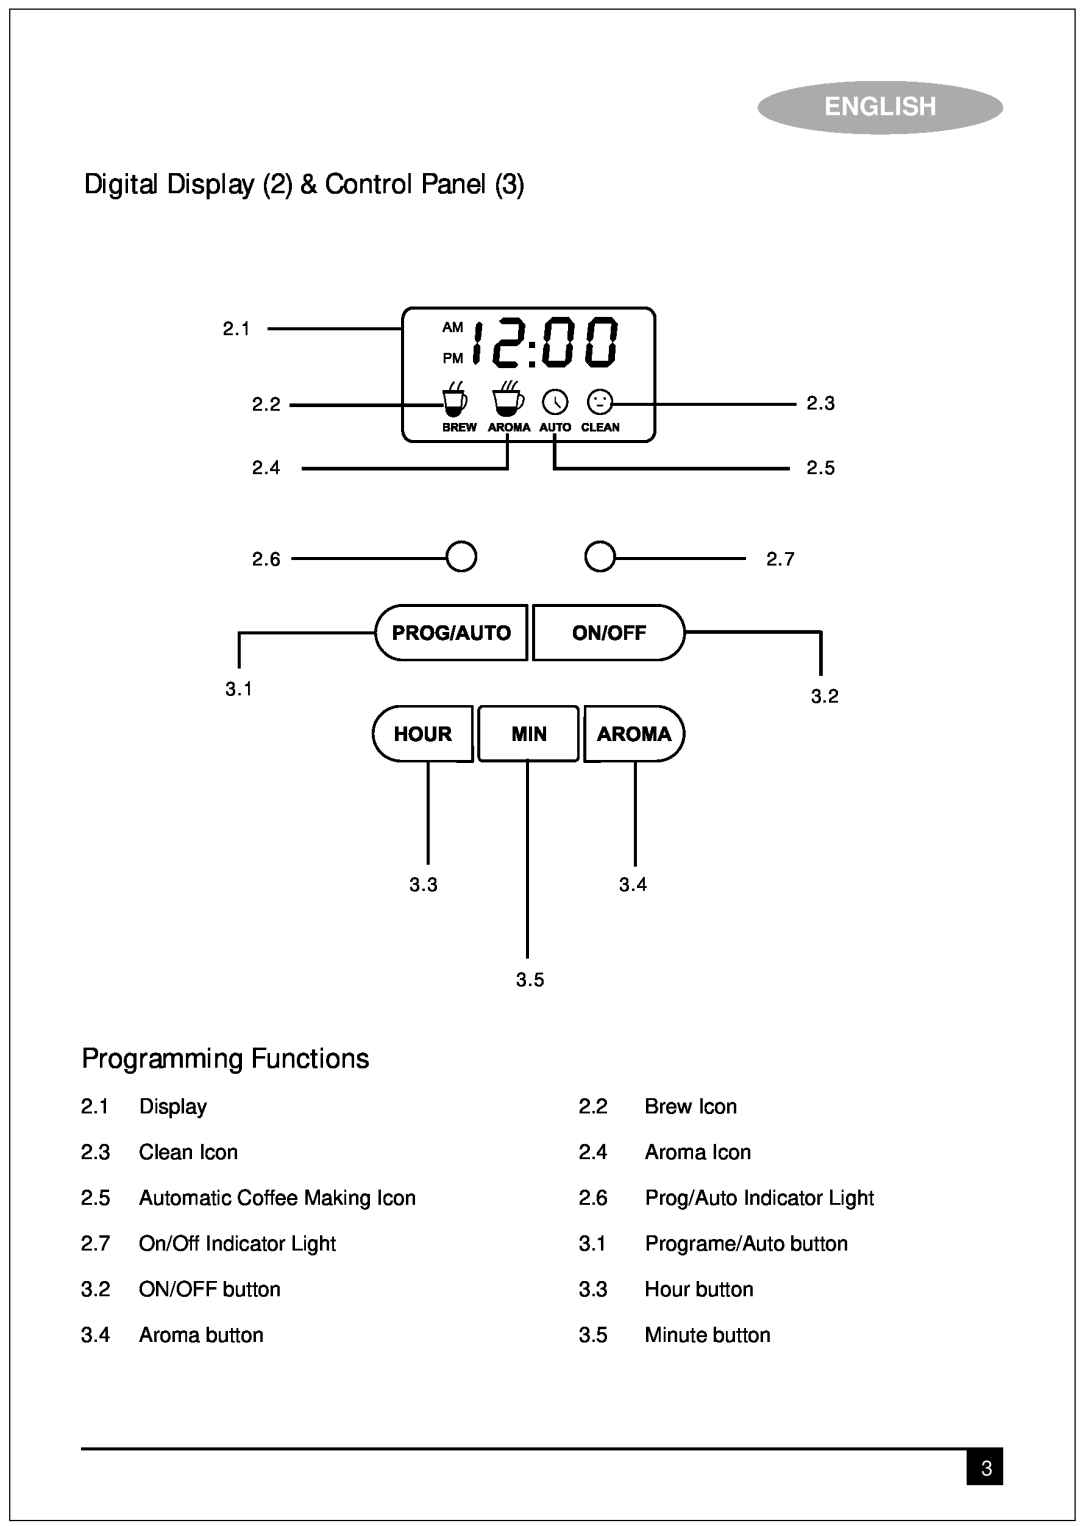 Black & Decker DCM90 manual Programming Functions, English, Digital Display 2 & Control Panel 